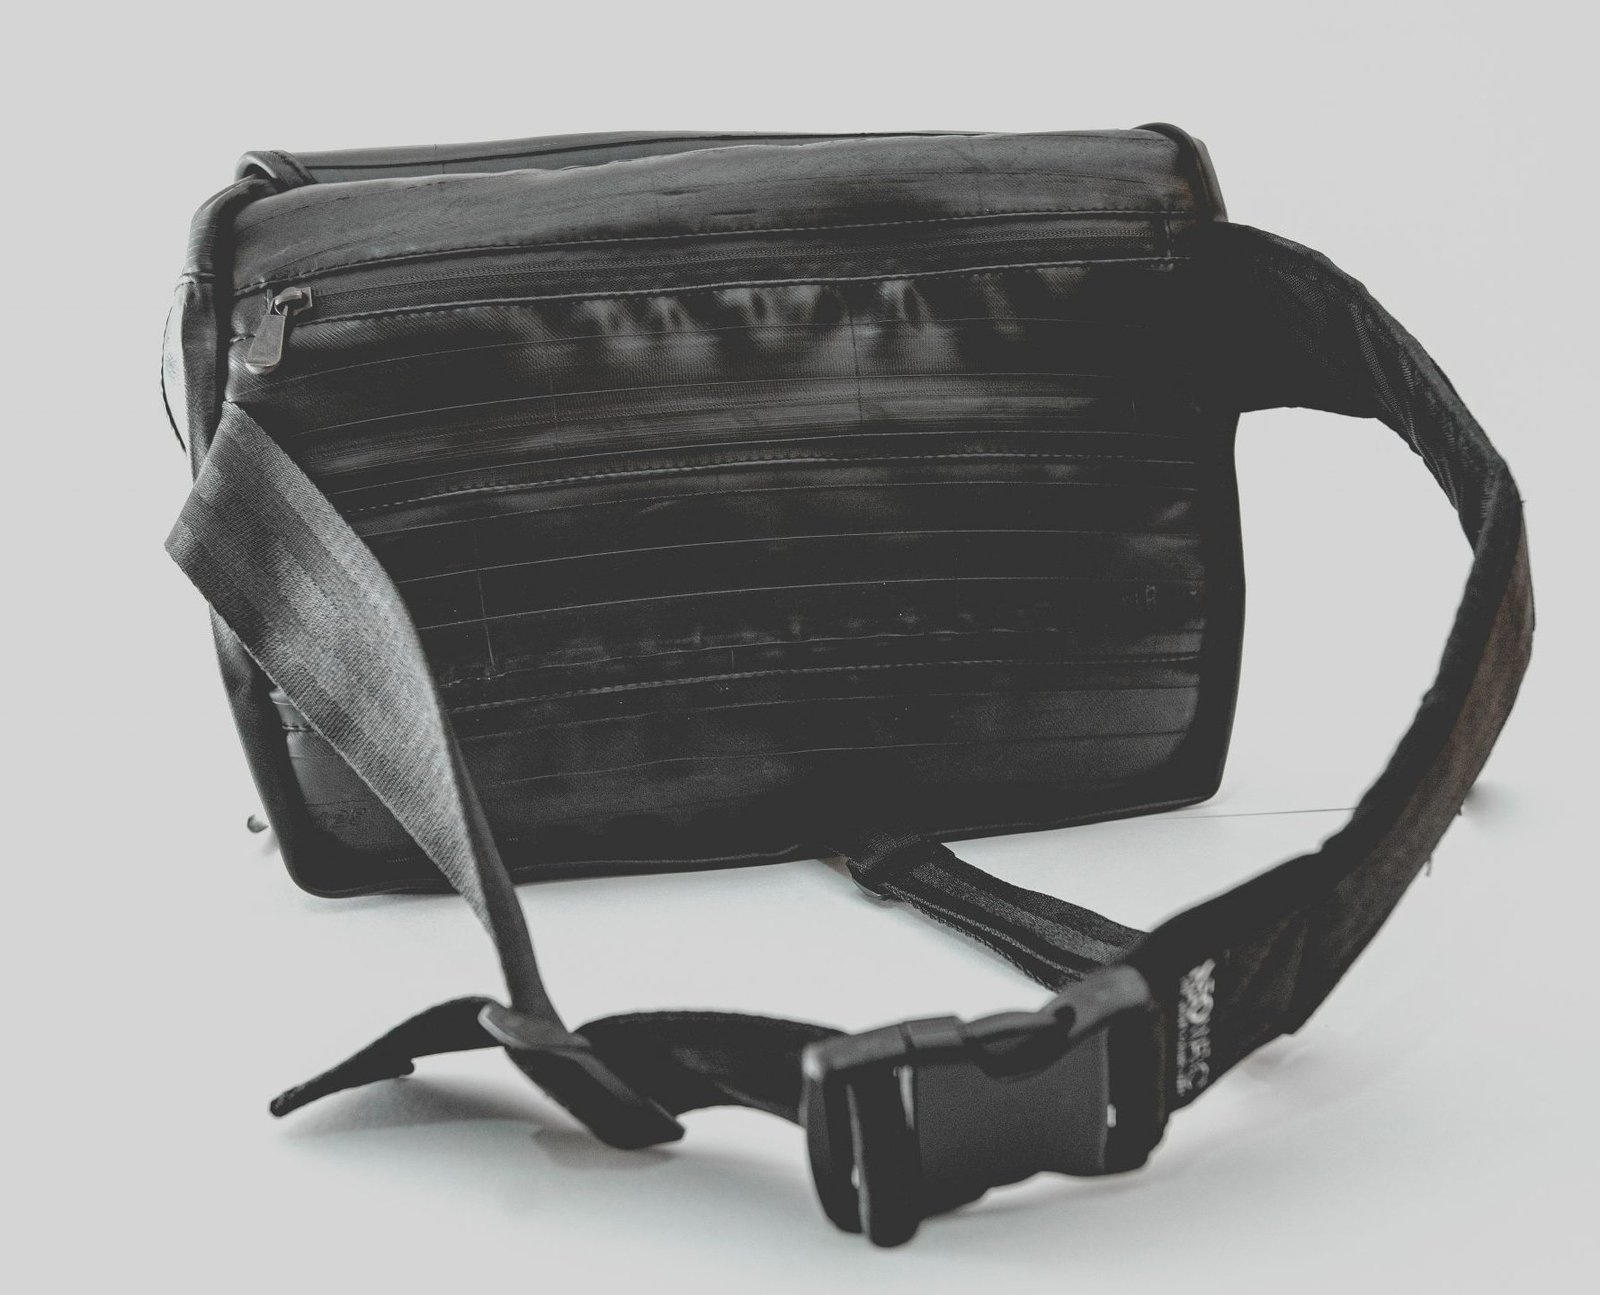 The Prototype Shoulder Bag